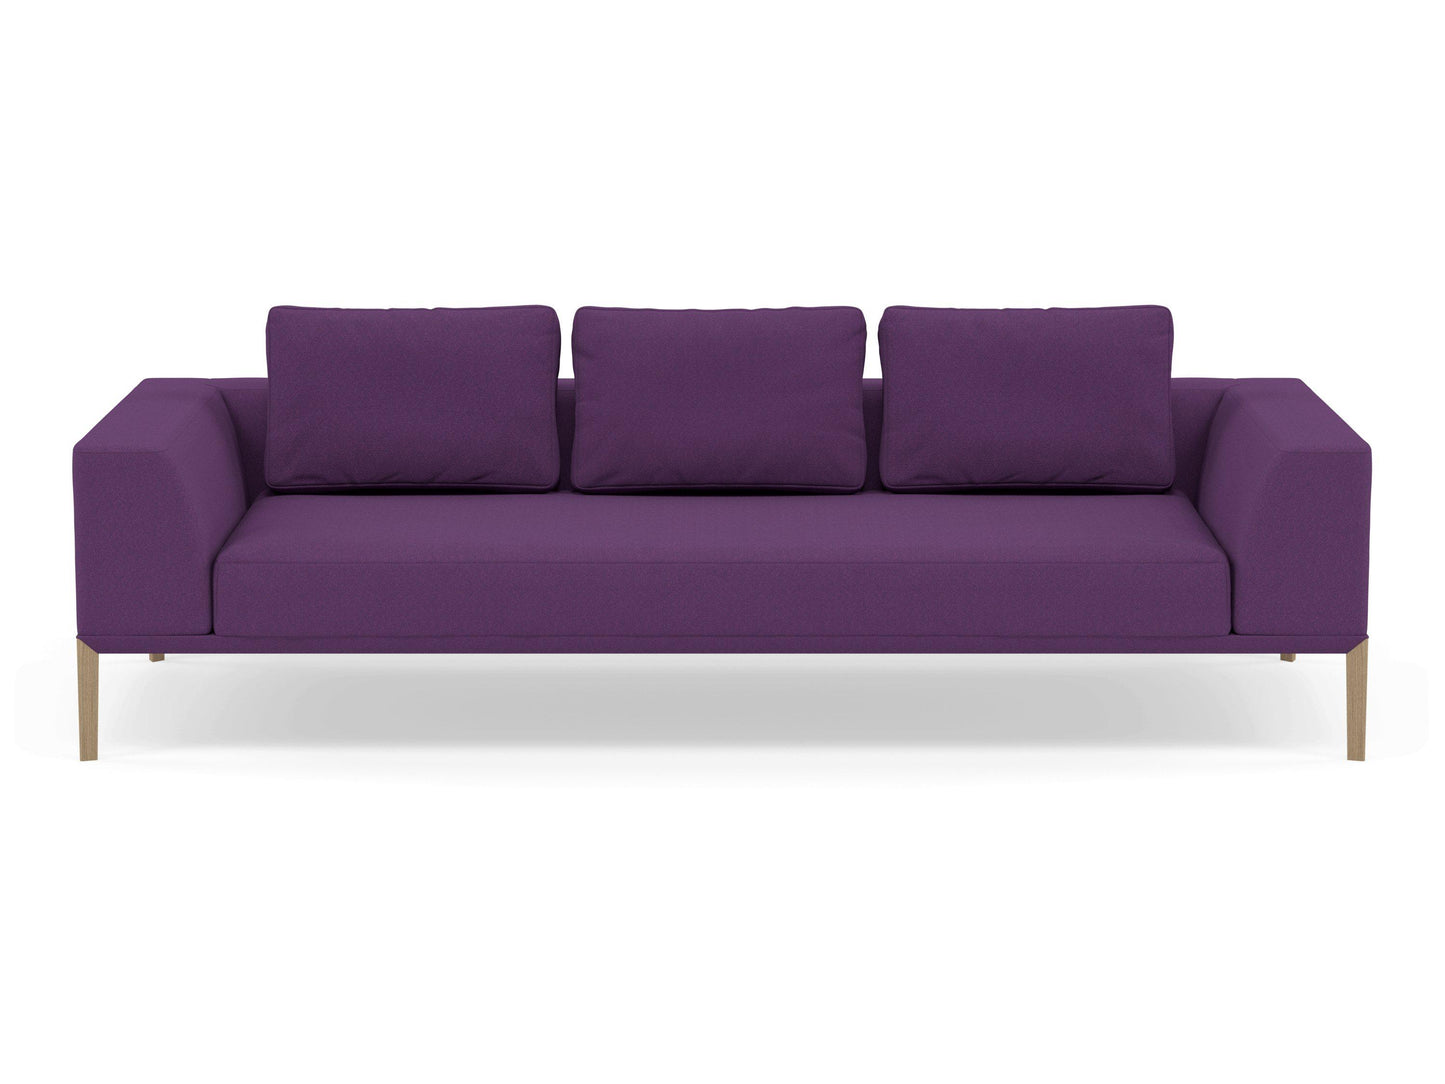 Modern 3 Seater Sofa with Armrests in Deep Purple Fabric for lounge, hotel, bar, restaurant-Natural Oak-Distinct Designs (London) Ltd